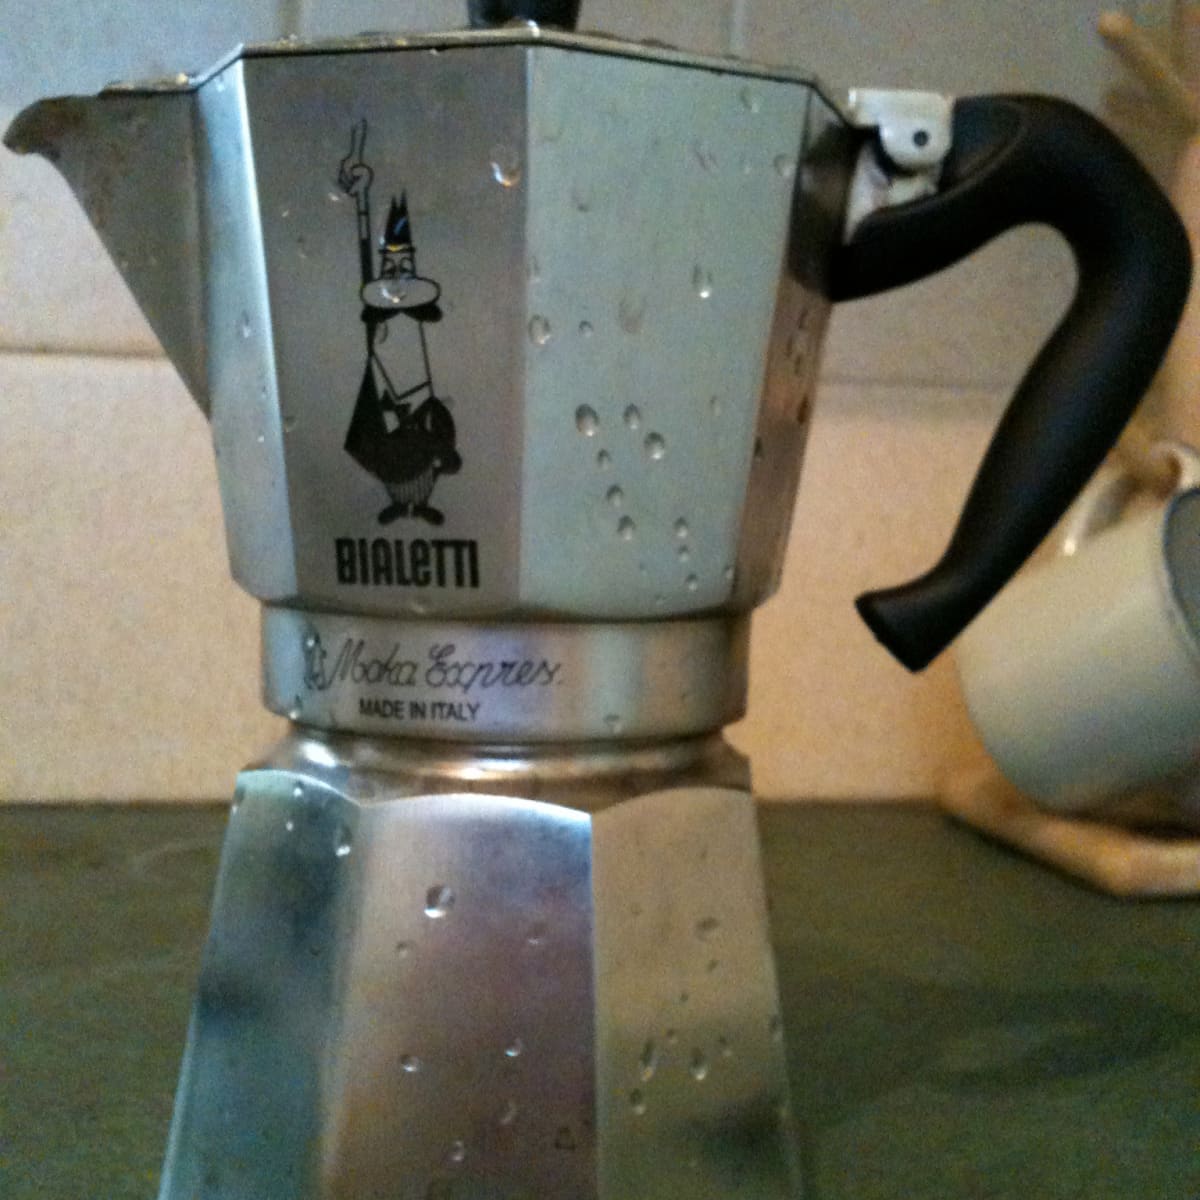 Stovetop, Coffee Equipment